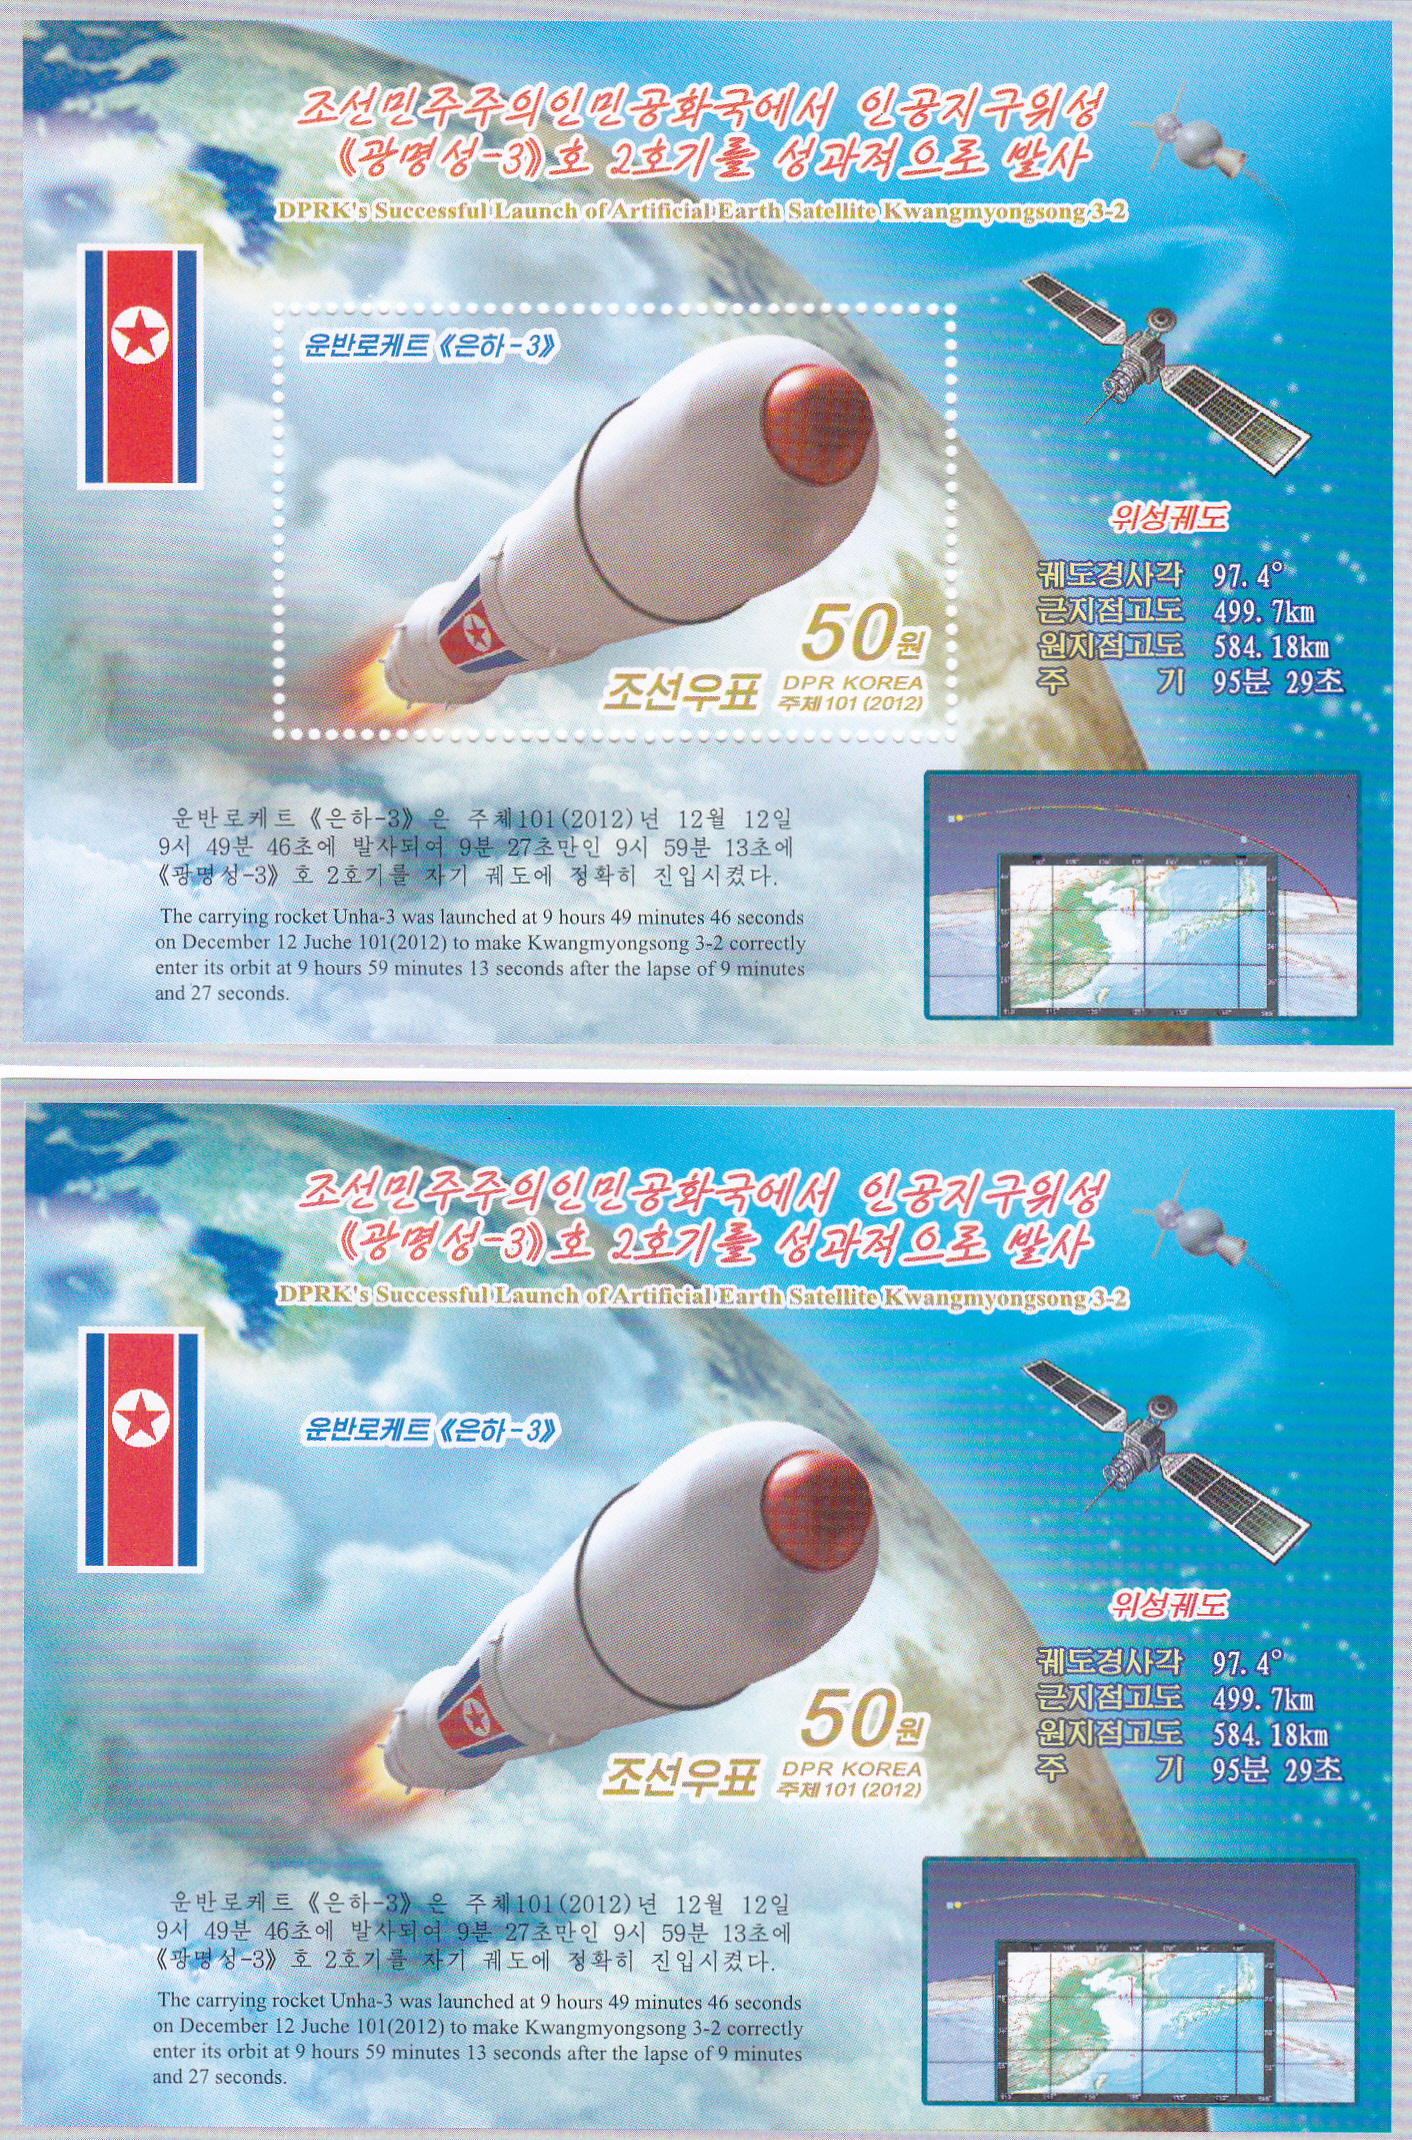 L4400, Korea 2012 "Launch Kwangmyongsong 3-2 Missle Rocket" Stamp, 2 pcs Imperforate MS